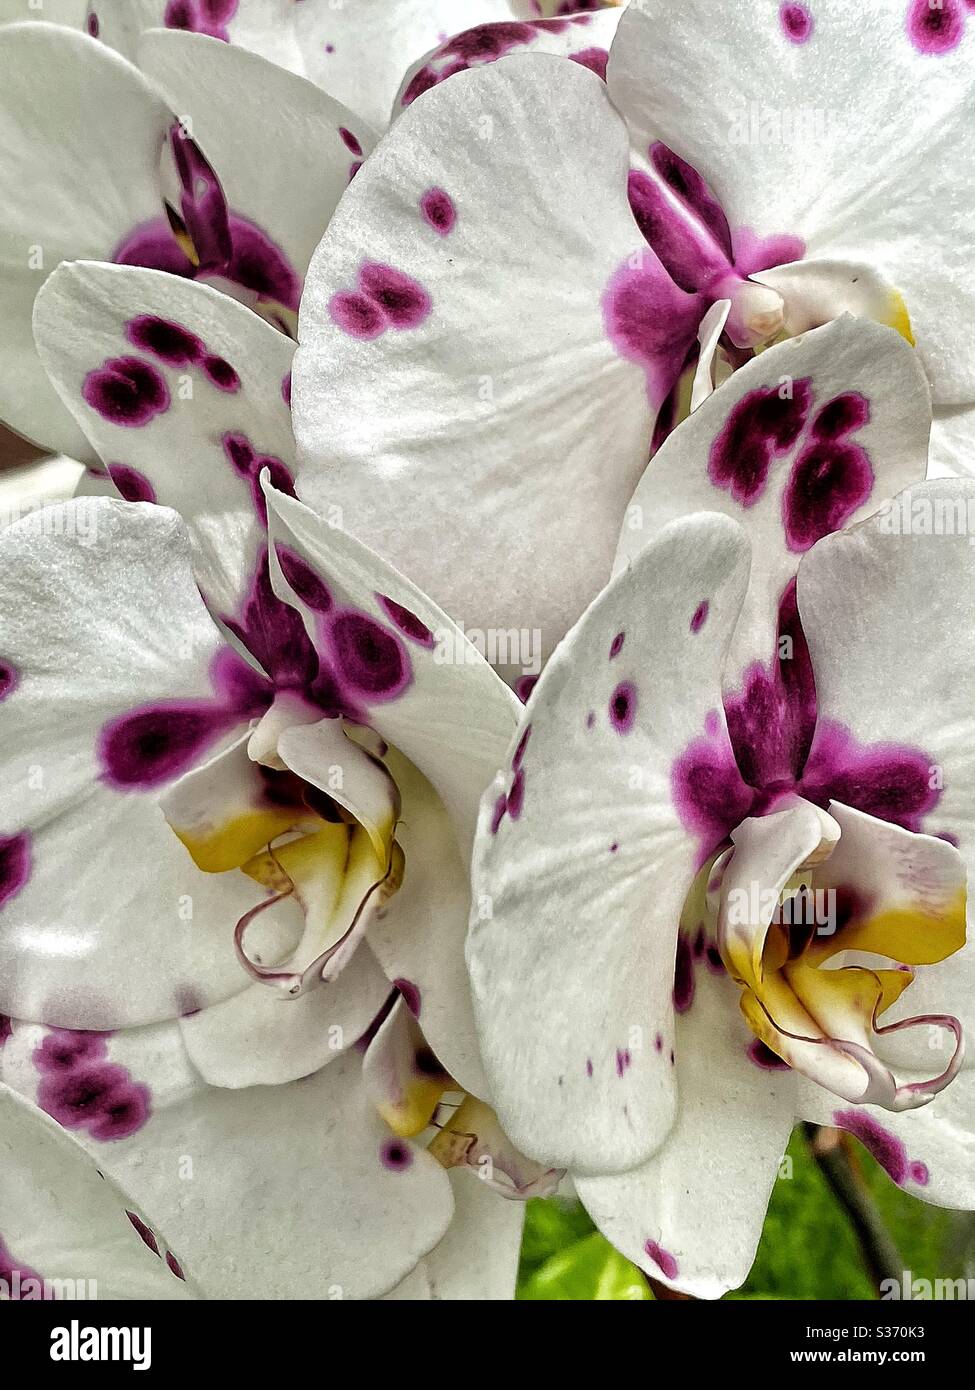 Flor blanca con manchas moradas fotografías e imágenes de alta resolución -  Alamy